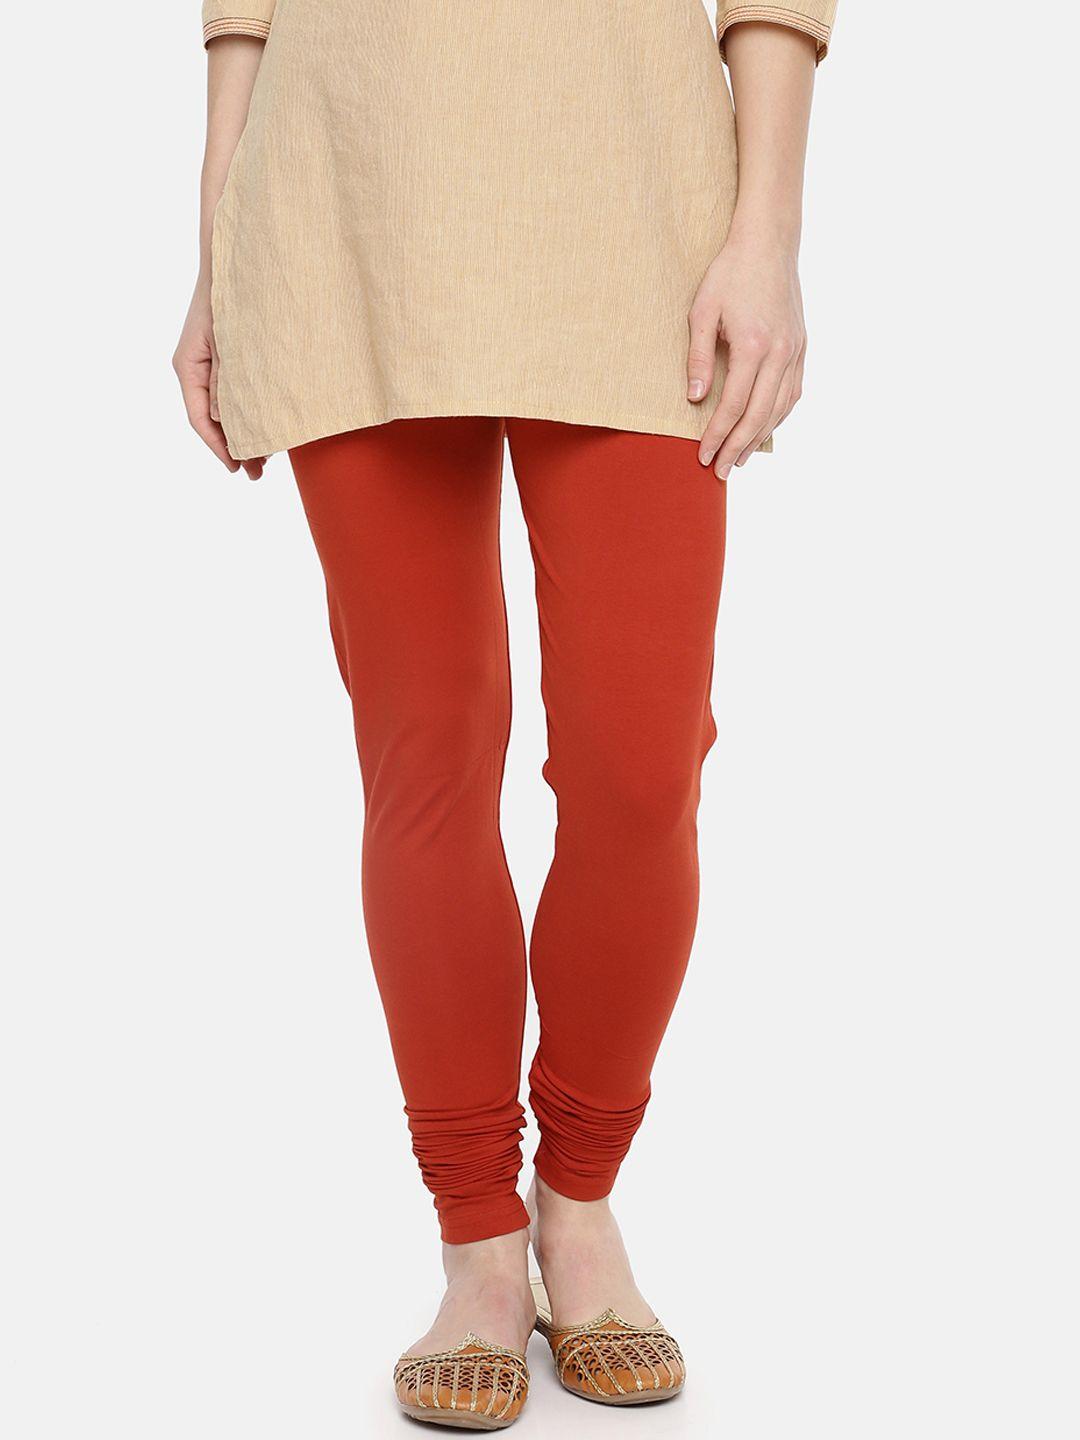 dollar missy women rust red solid churidar length leggings